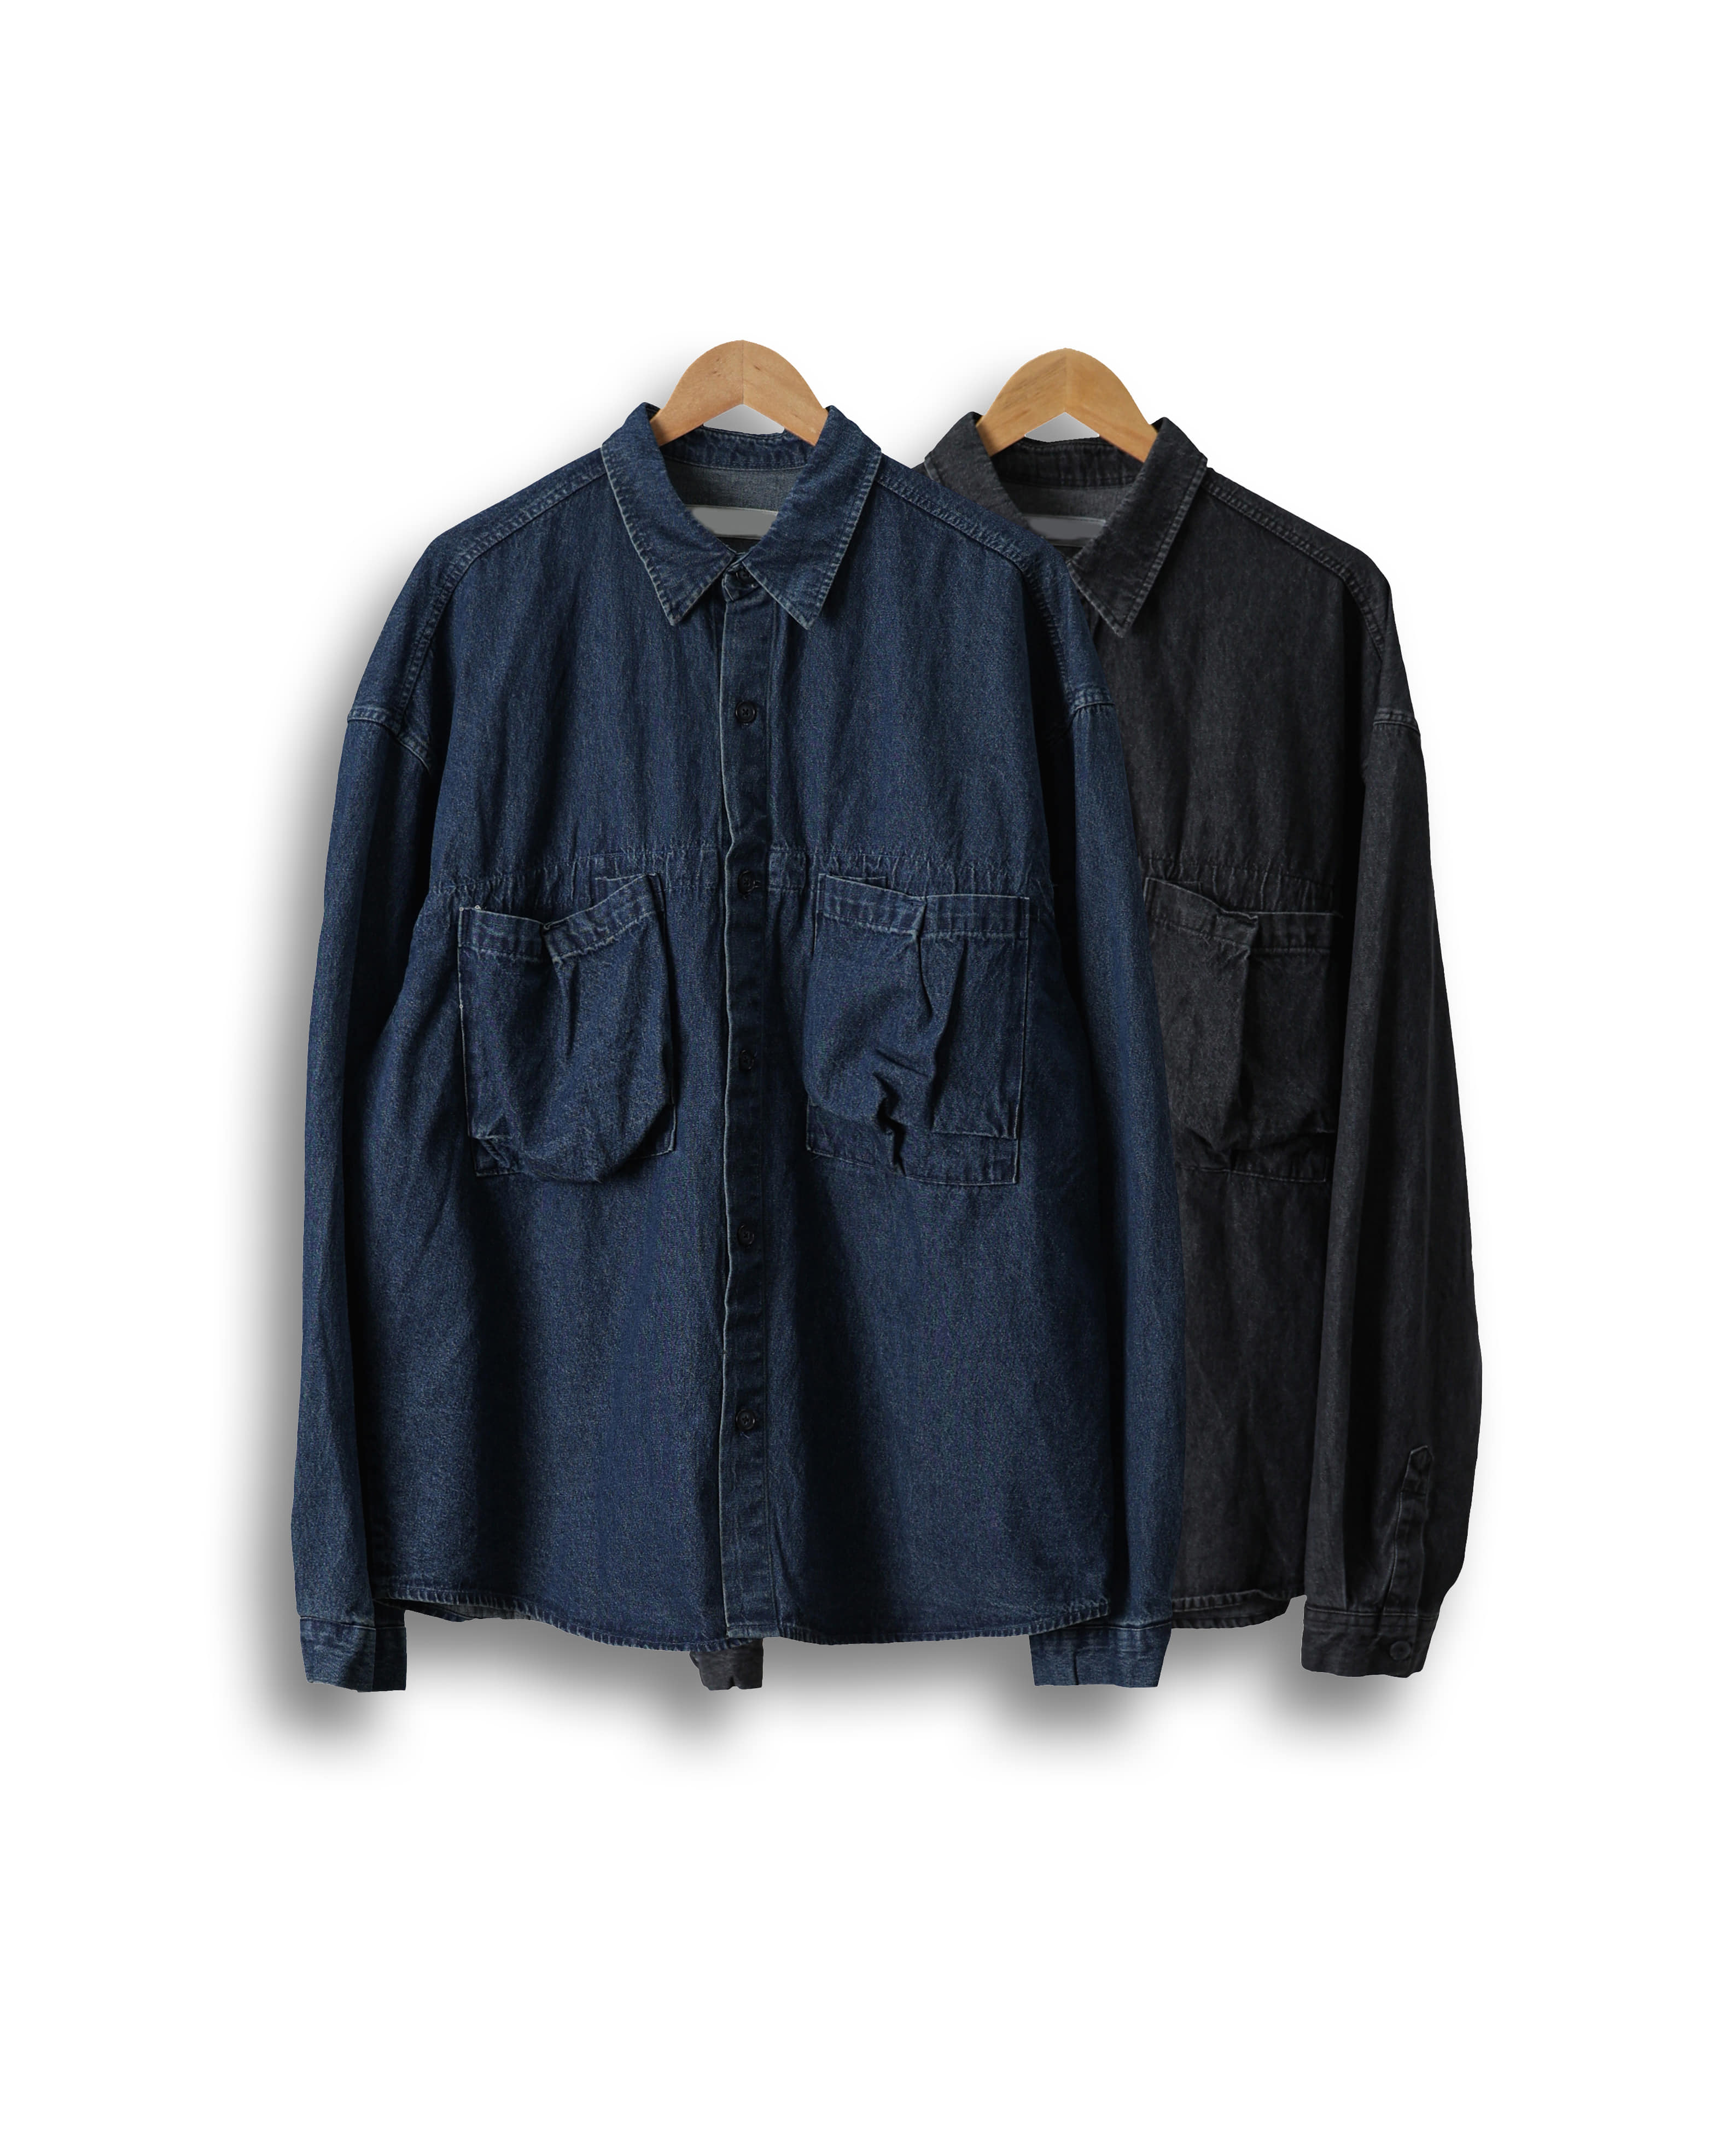 FAMS Mention Pocket Denim Shirts Jacket (Black Denim/Blue Denim) - 4차 리오더 (3/30 배송예정)